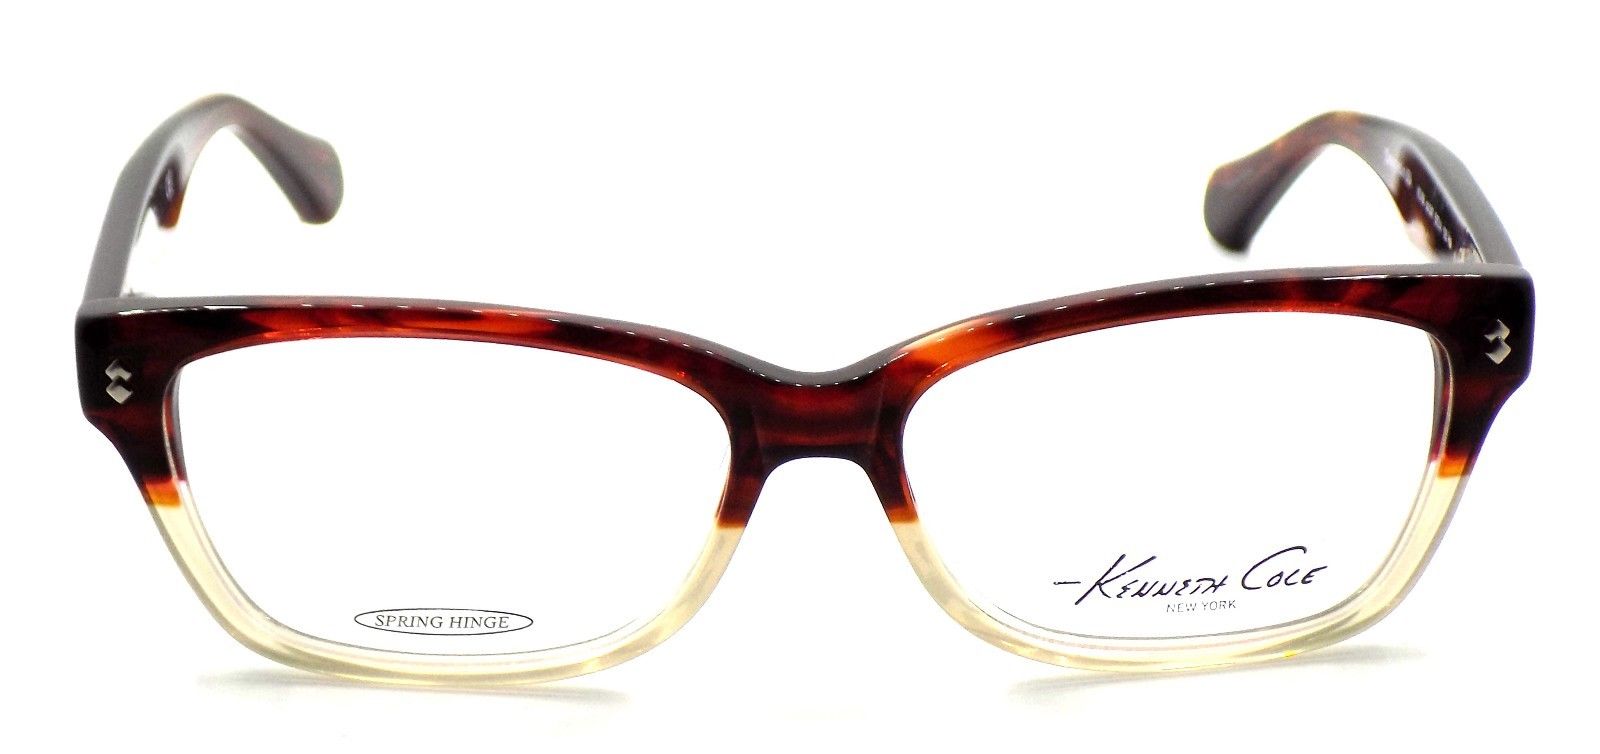 2-Kenneth Cole NY KC198 047 Women's Eyeglasses Frames 53-14-135 Brown + CASE-664689582693-IKSpecs